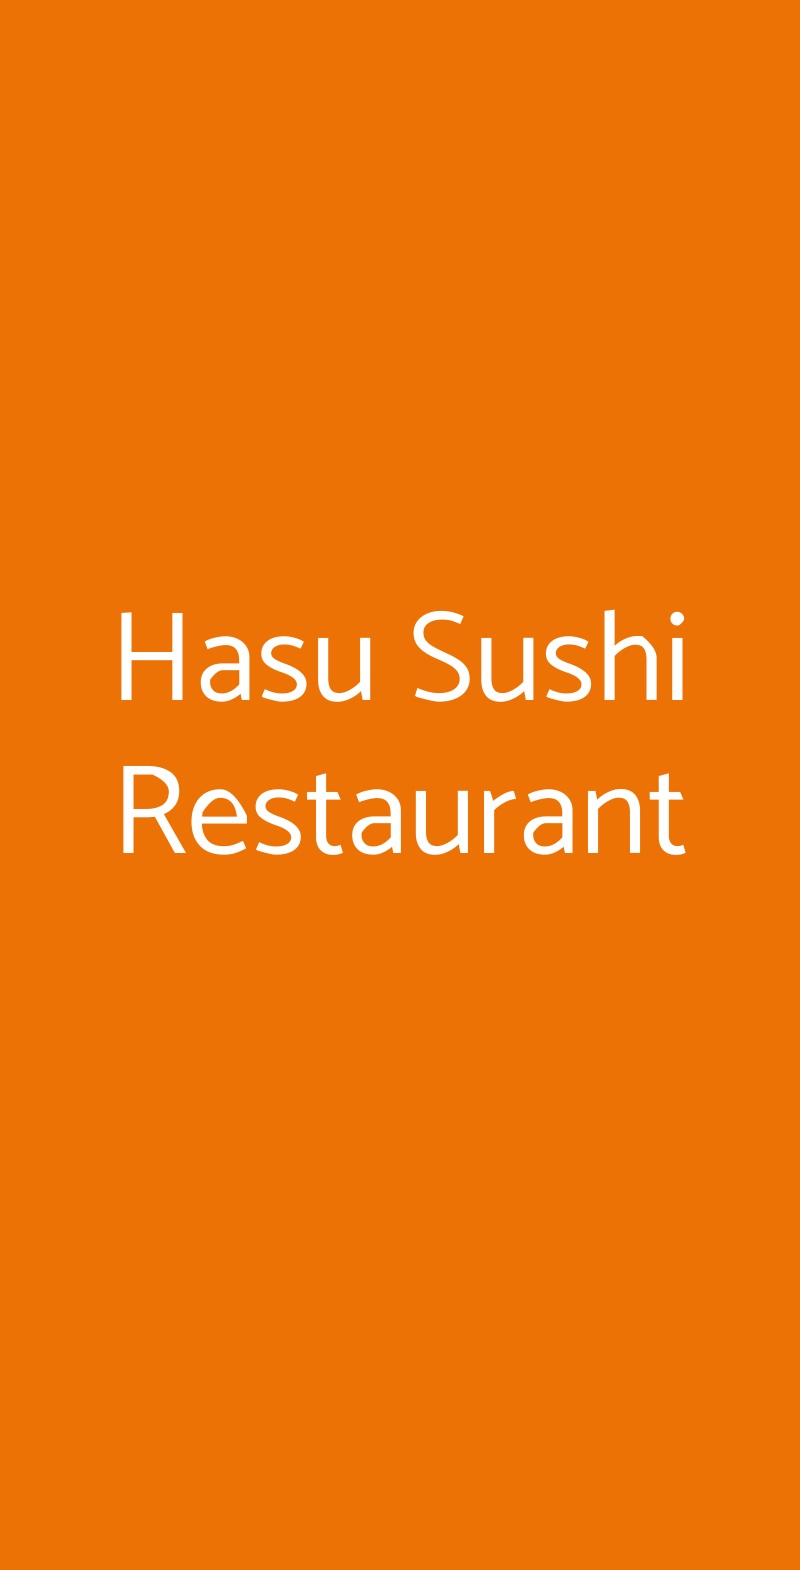 Hasu Sushi Restaurant Milano menù 1 pagina